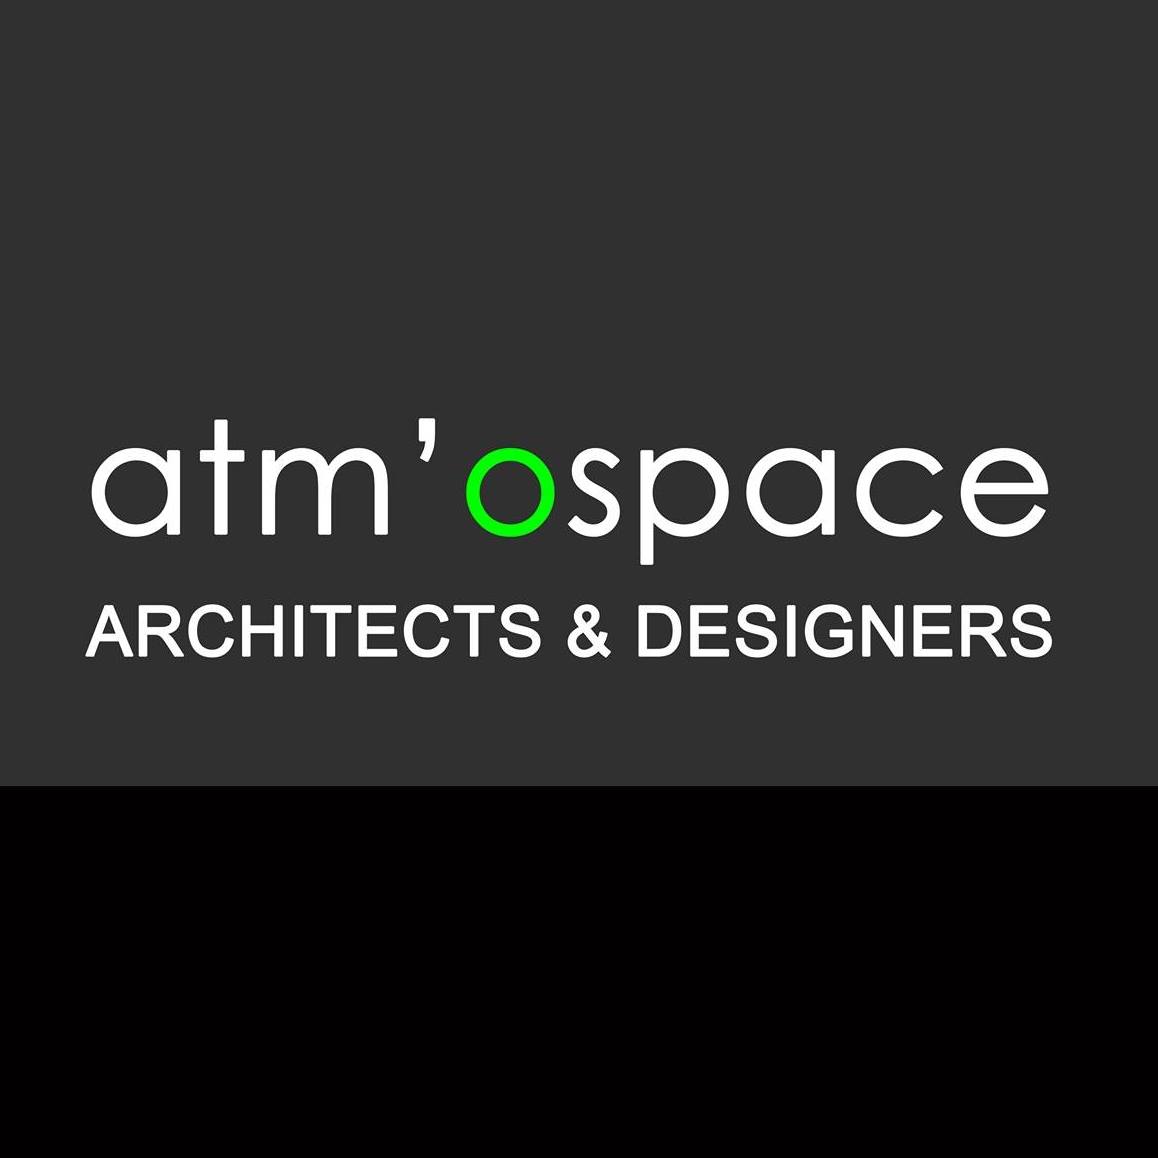 apm'ospace Logo